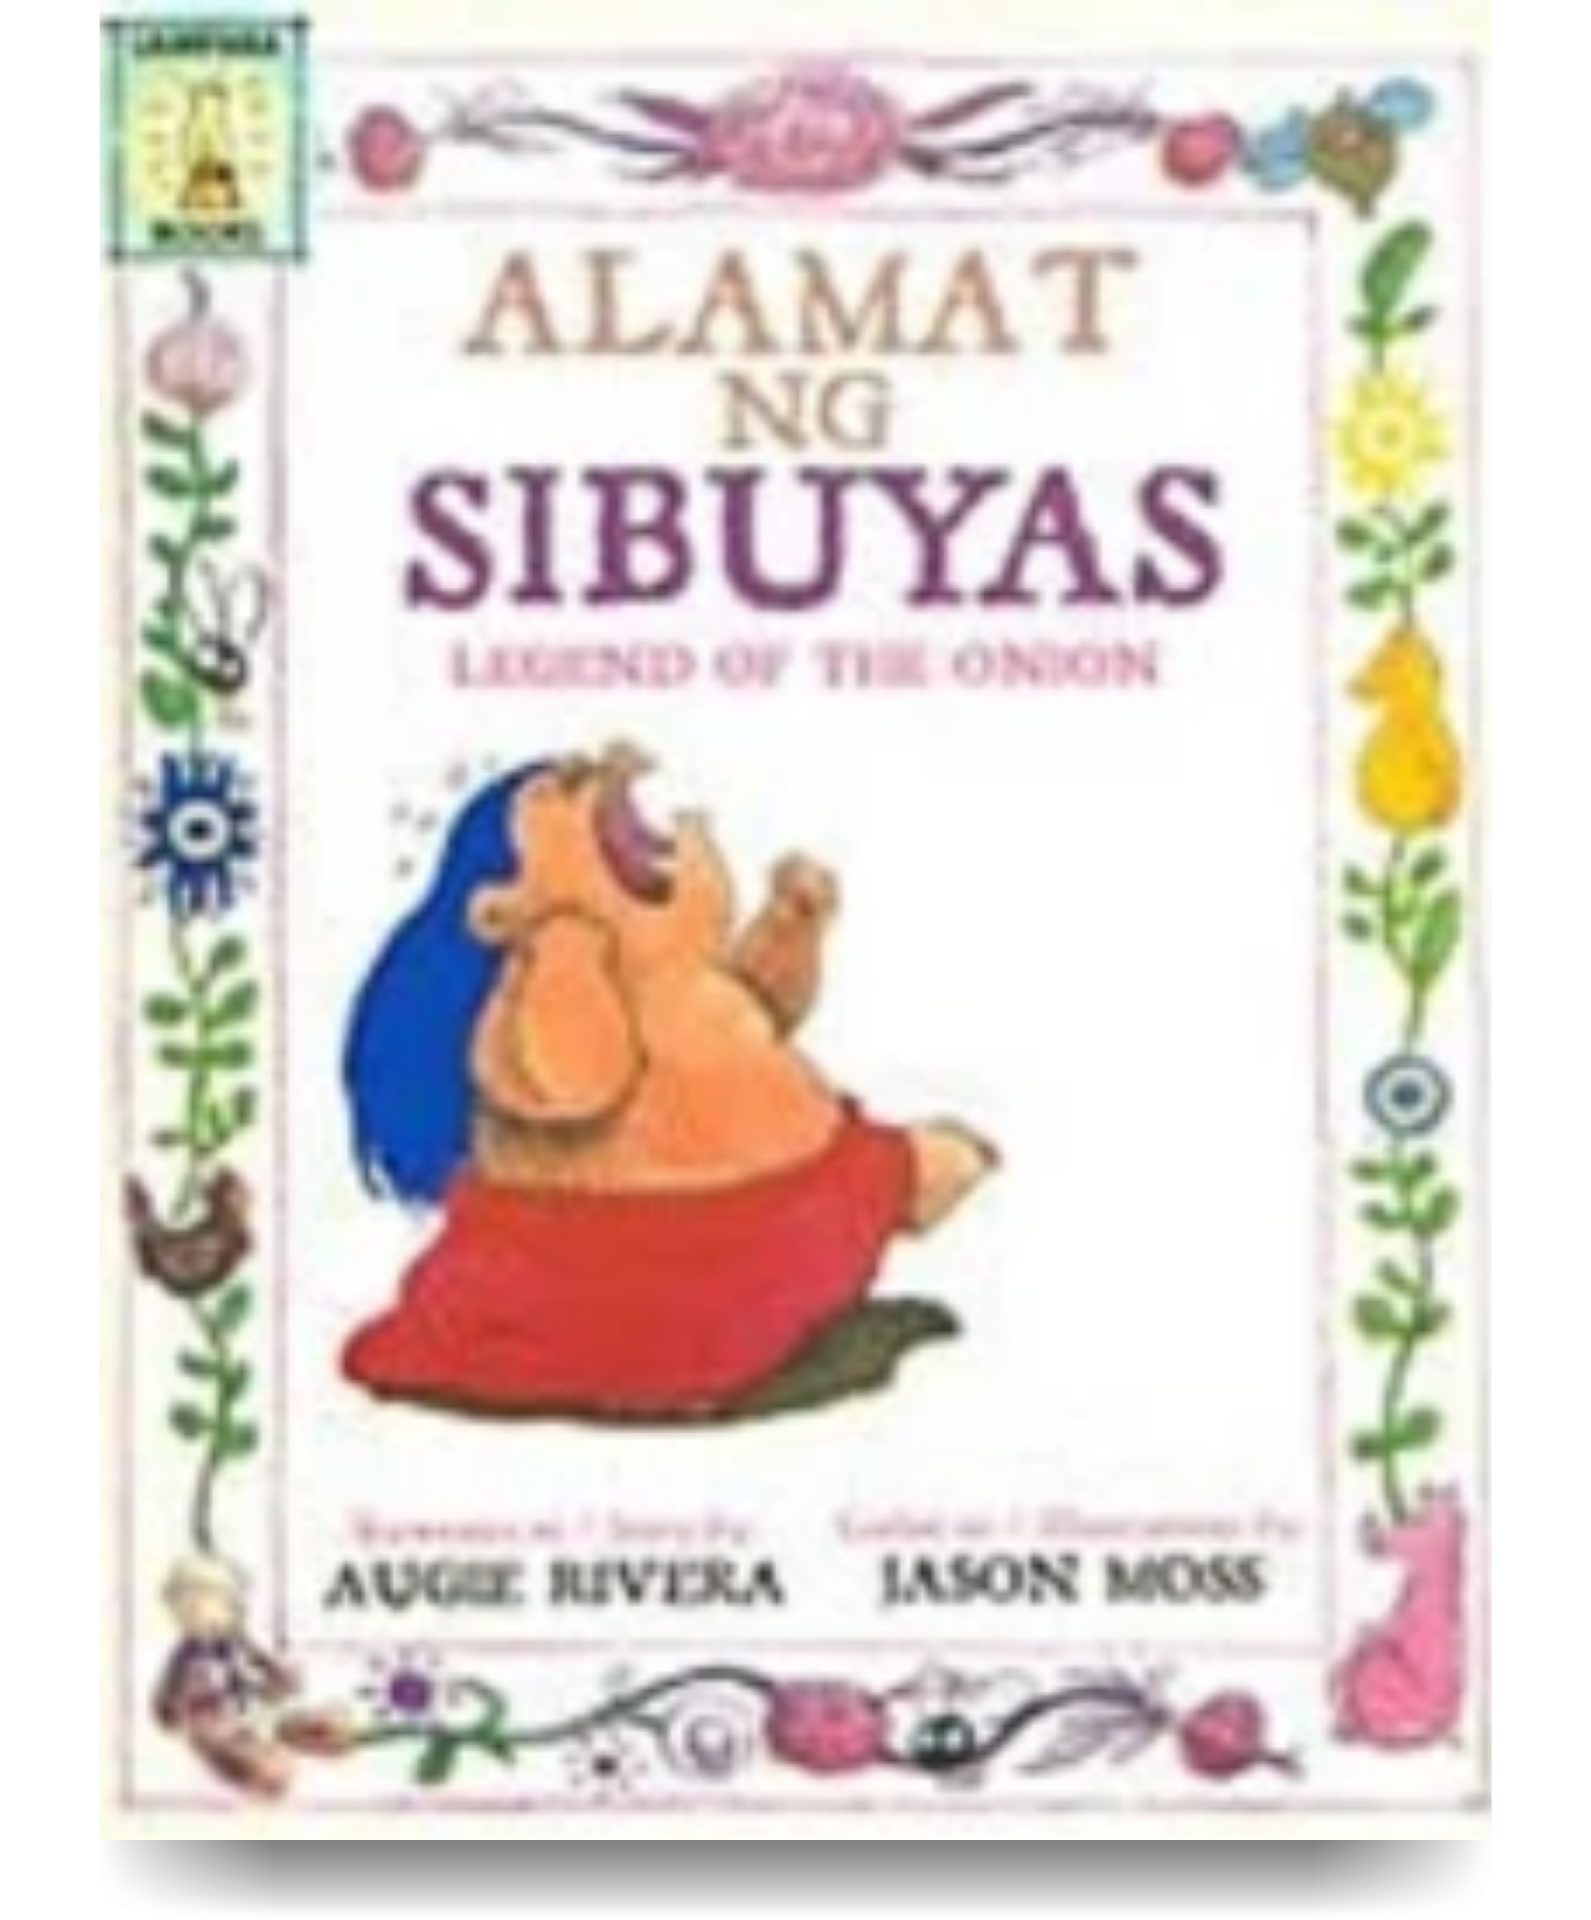 Alamat ng Sibuyas (Legend of the Onion)